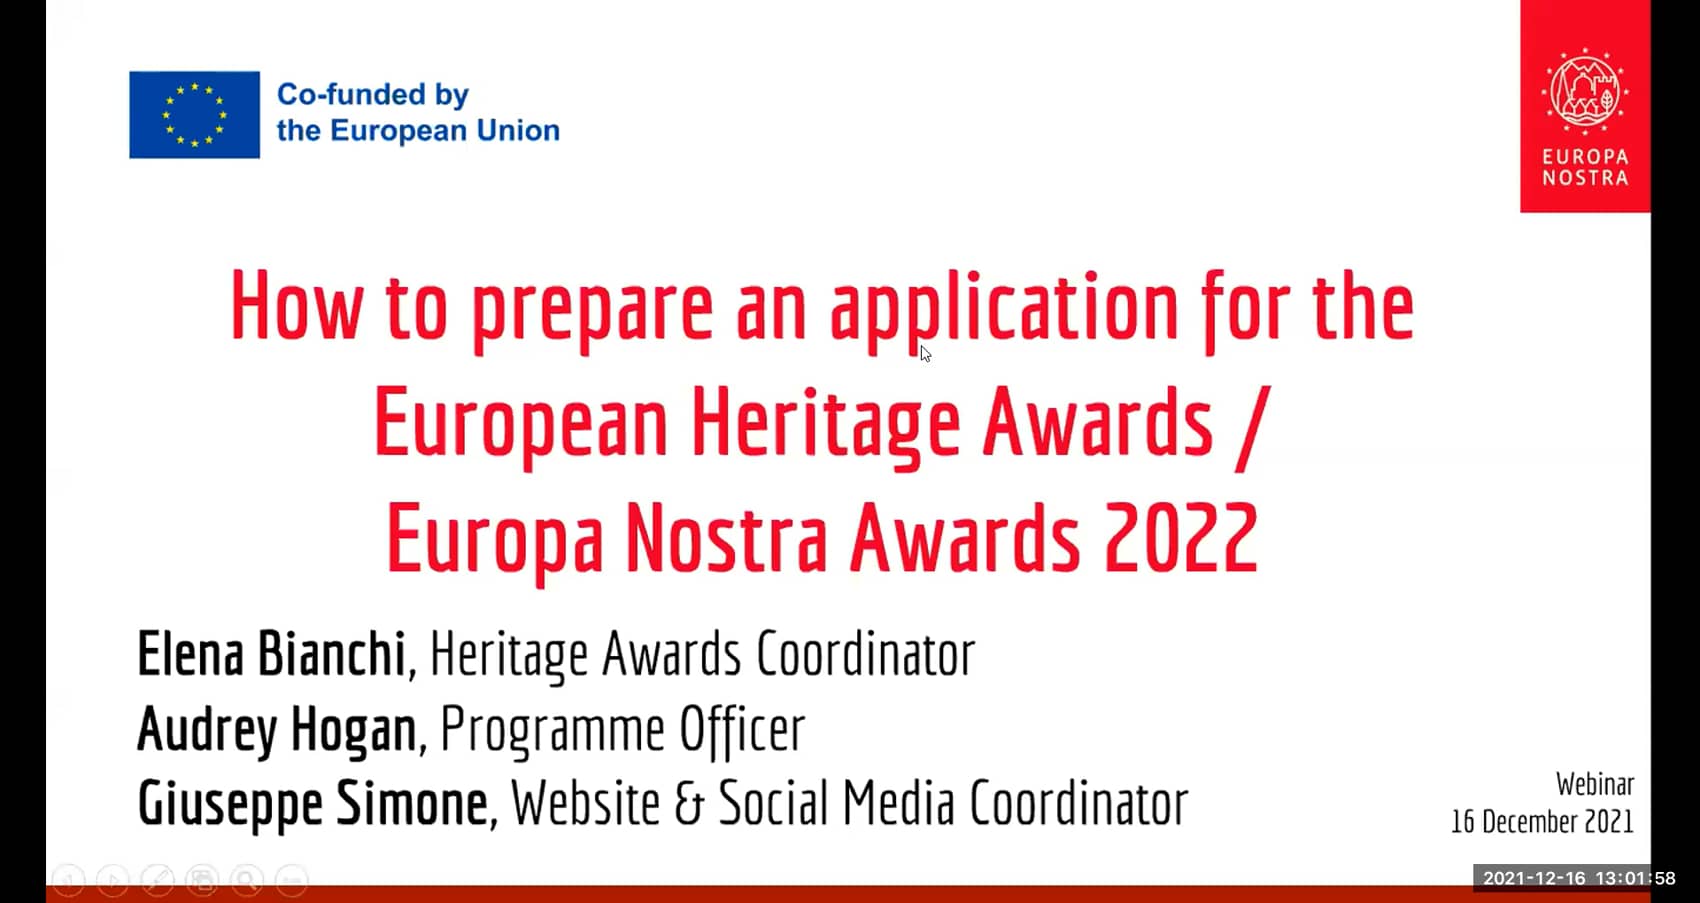 restaurant ketting stad Apply - European Heritage Awards / Europa Nostra Awards